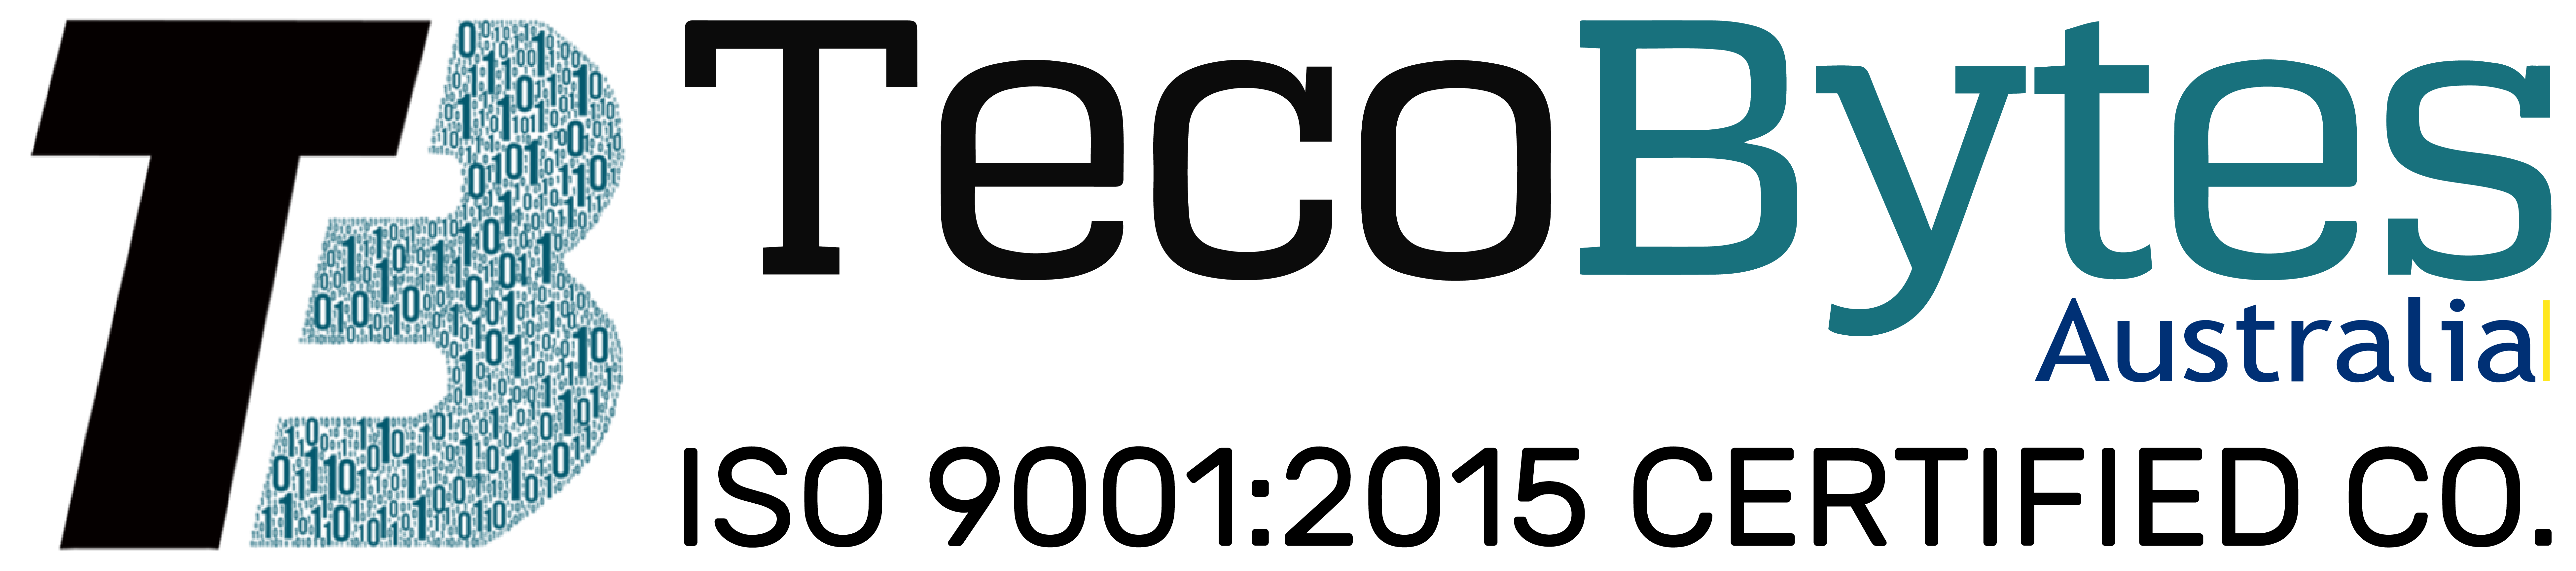 Tecobytes logo